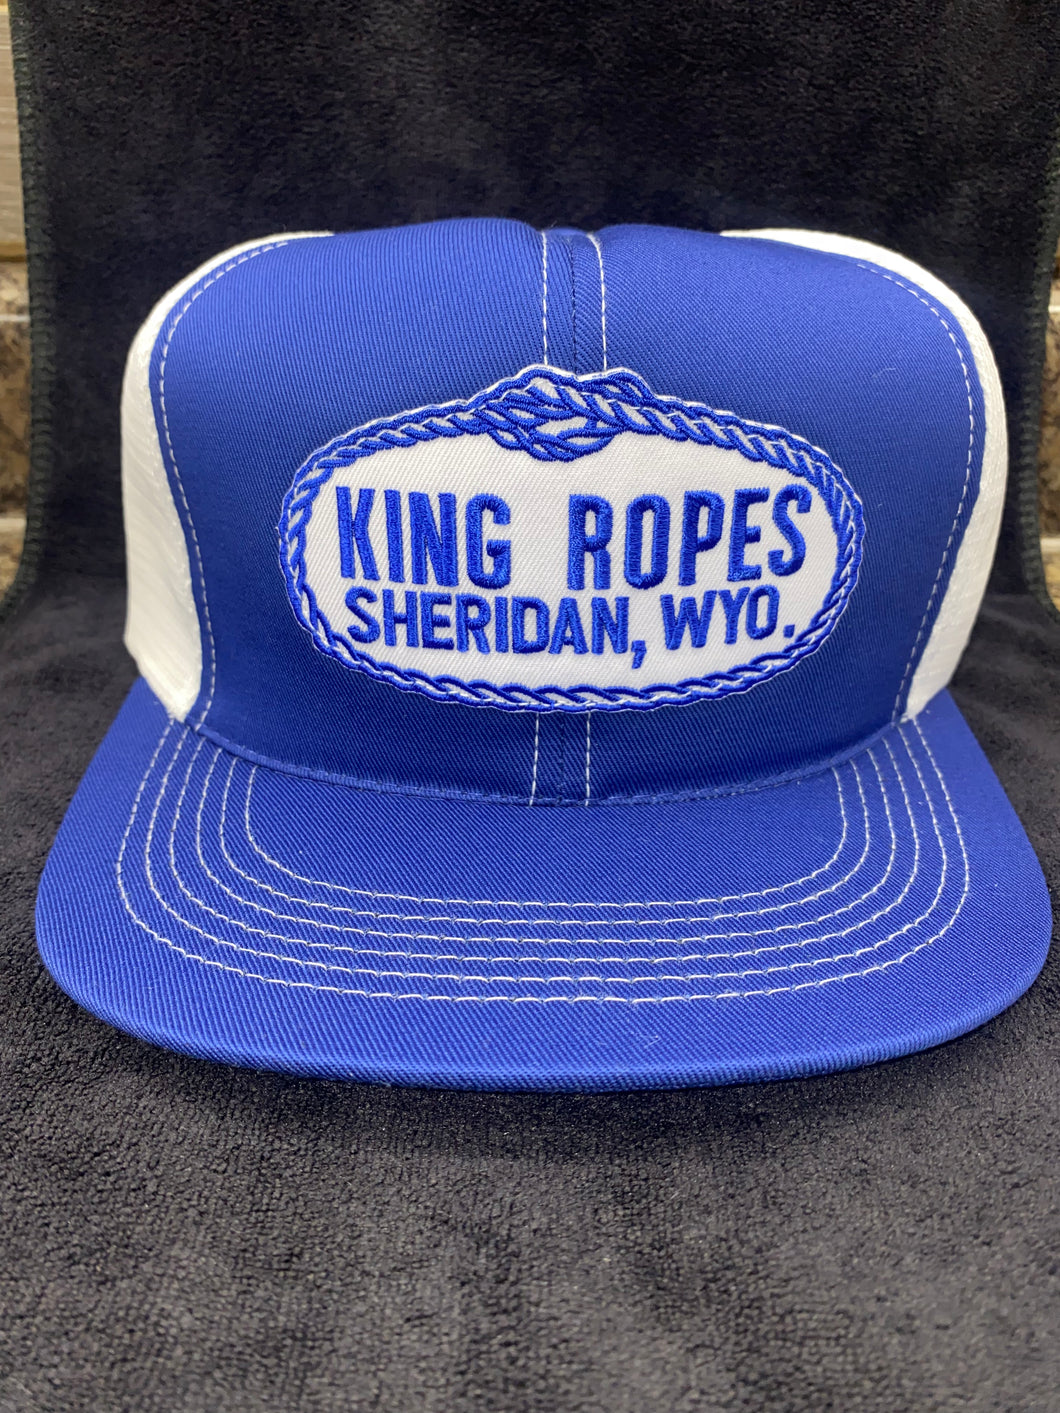 King Ropes Flat Bill Cap